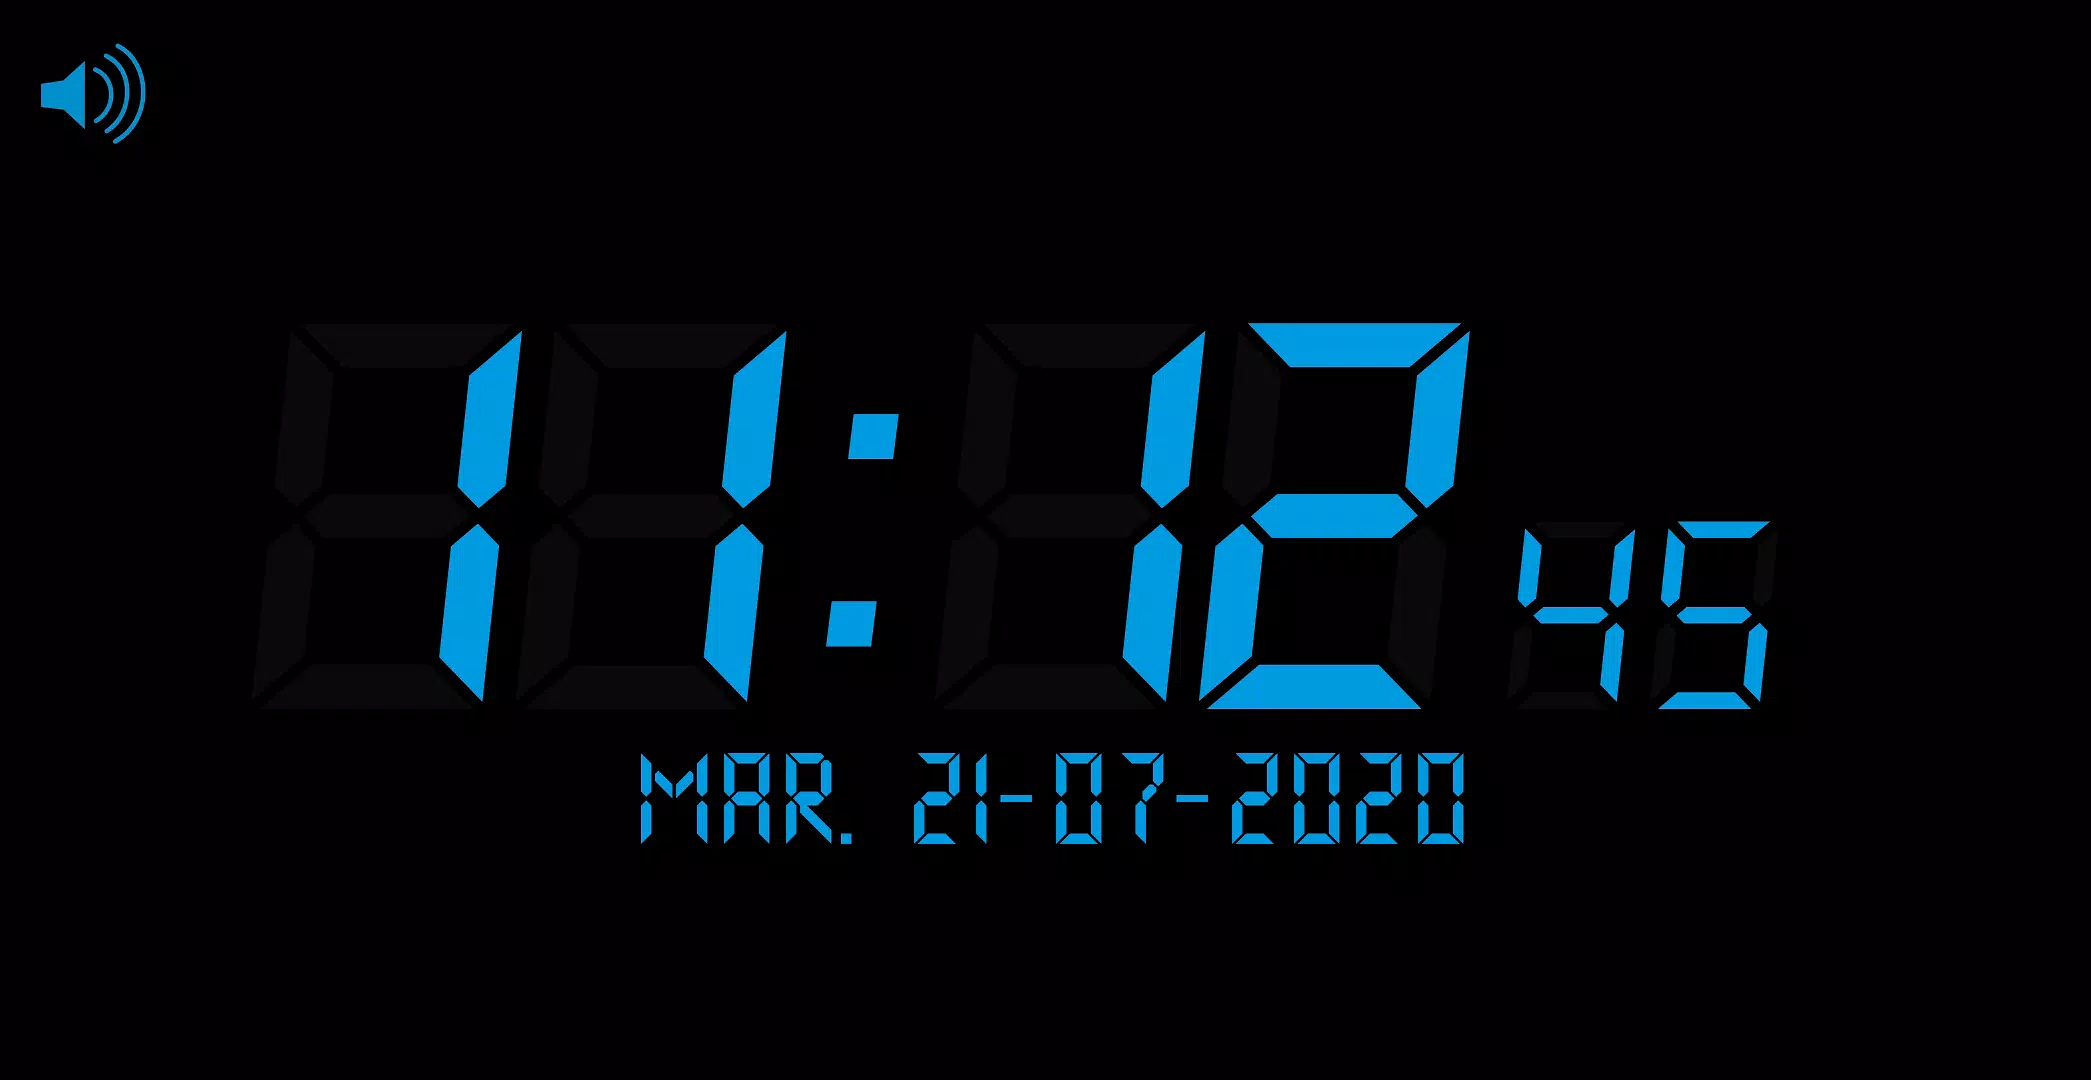 Часы мп 3. 307x450 Alarm mp3clock. Dark Design Clock 3 am. Alarm mp3.